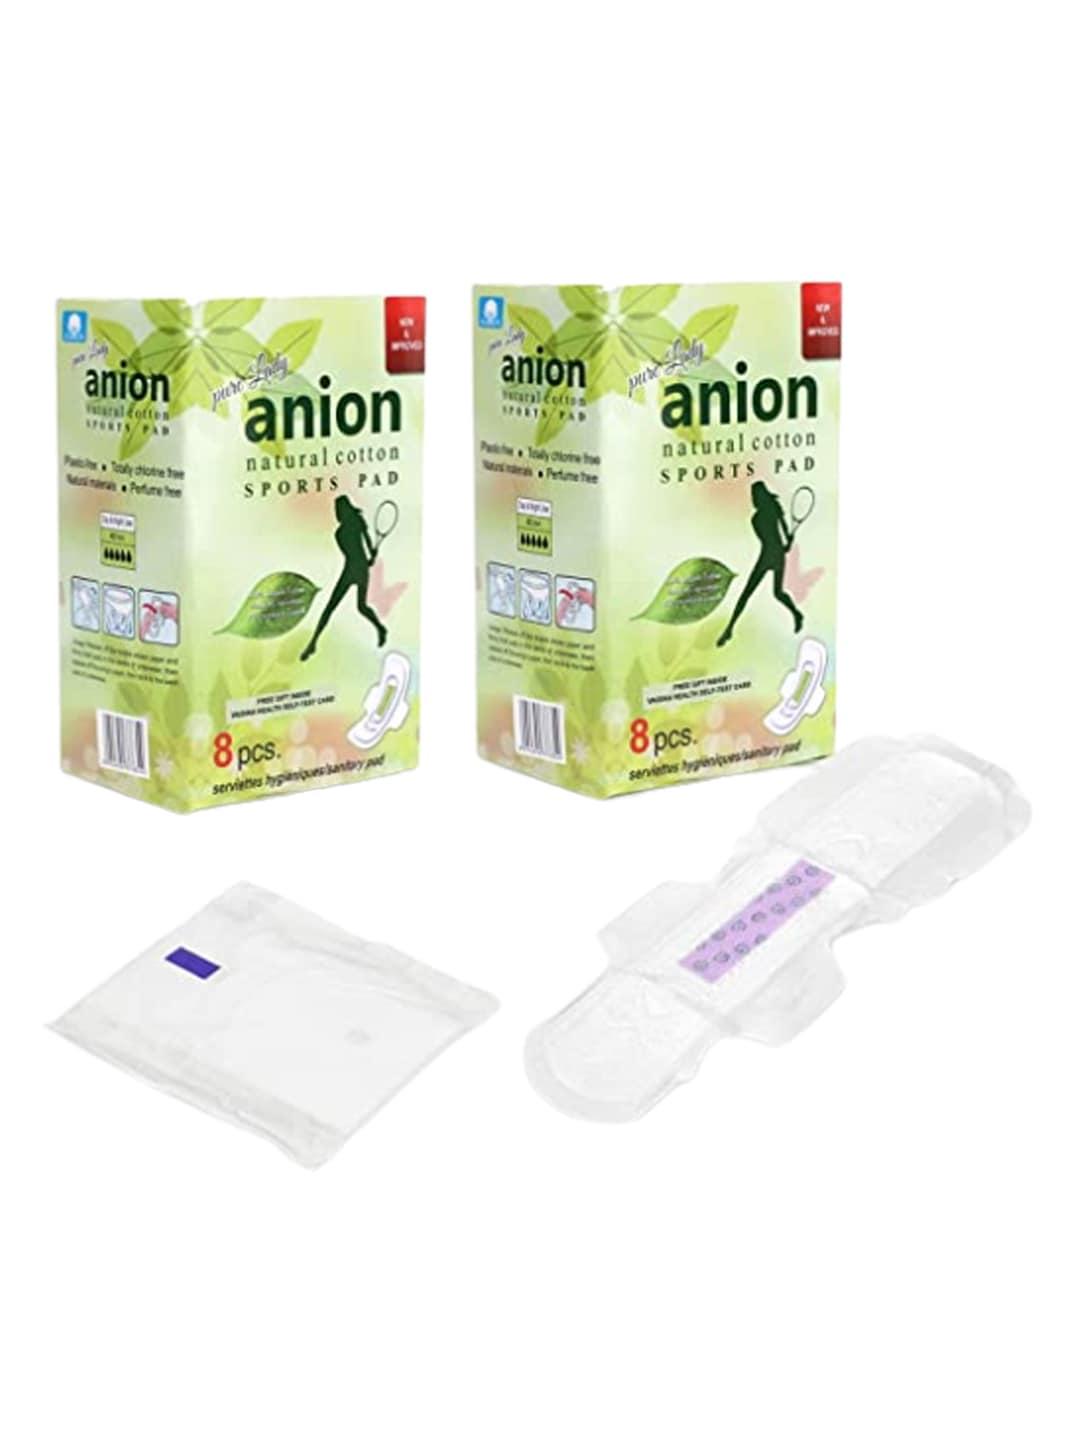 CareDone Set of 2 Anion Natural Cotton Ultra Thin Sports Sanitary Pads - 8 Pcs each